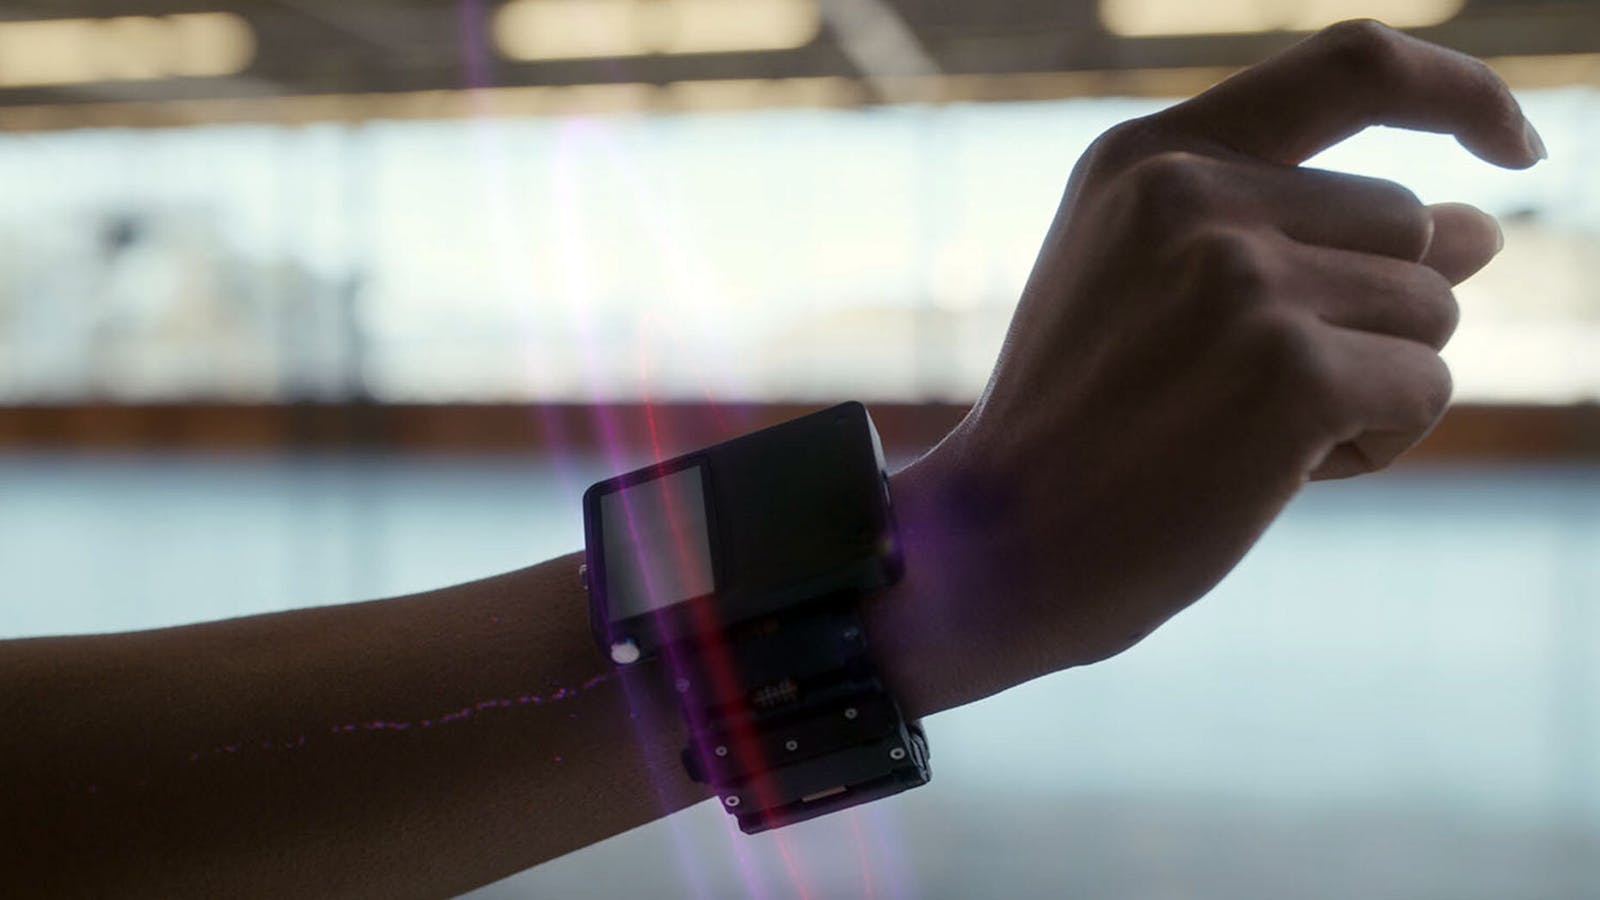 A prototype of Facebook’s neural interface wristband. Image: Facebook